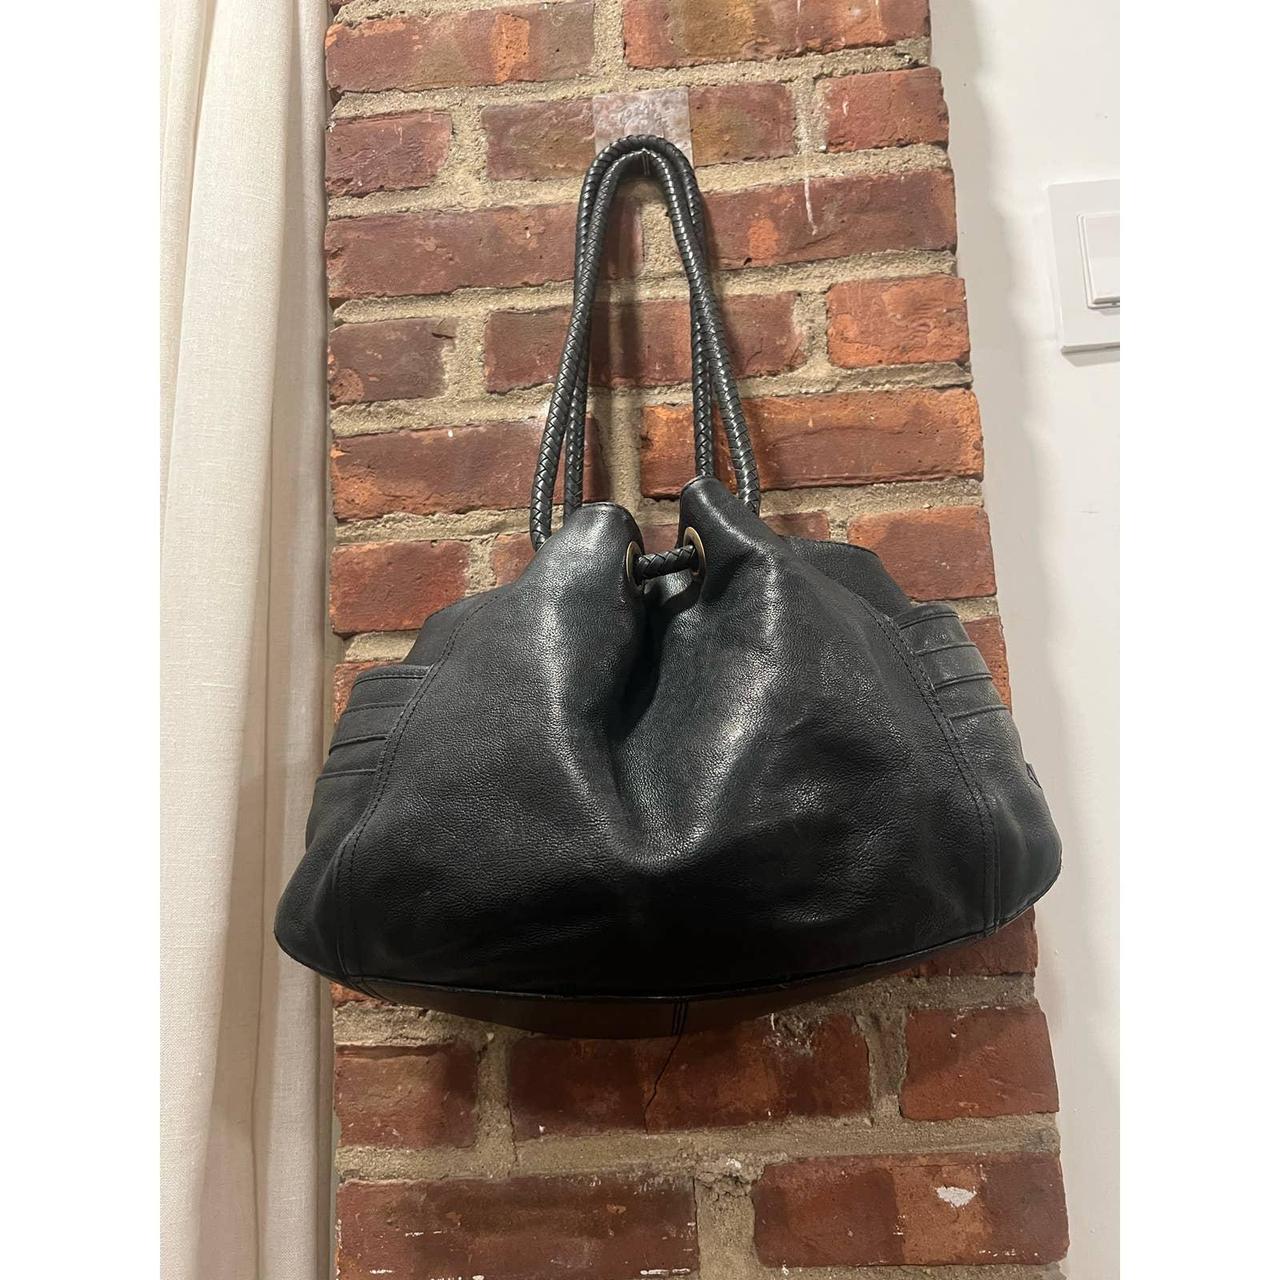 Cole Haan | Bags | Cole Haan Leather Large Handbag | Poshmark